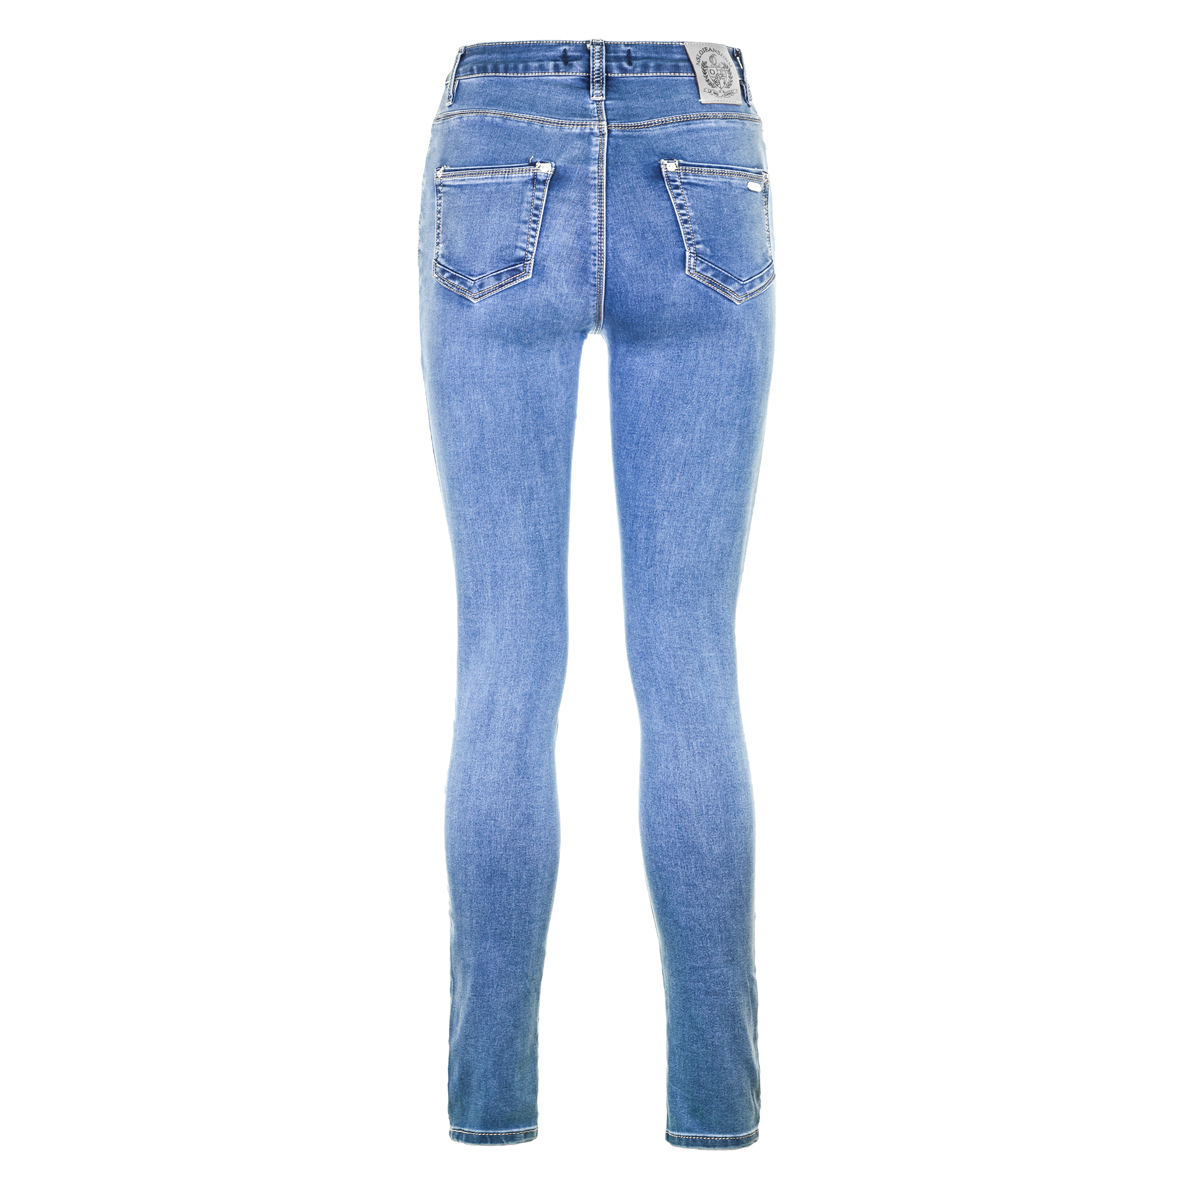 Жен. джинсы арт. 12-0086 Голубой р. 30 Китай, размер 30 - фото 3